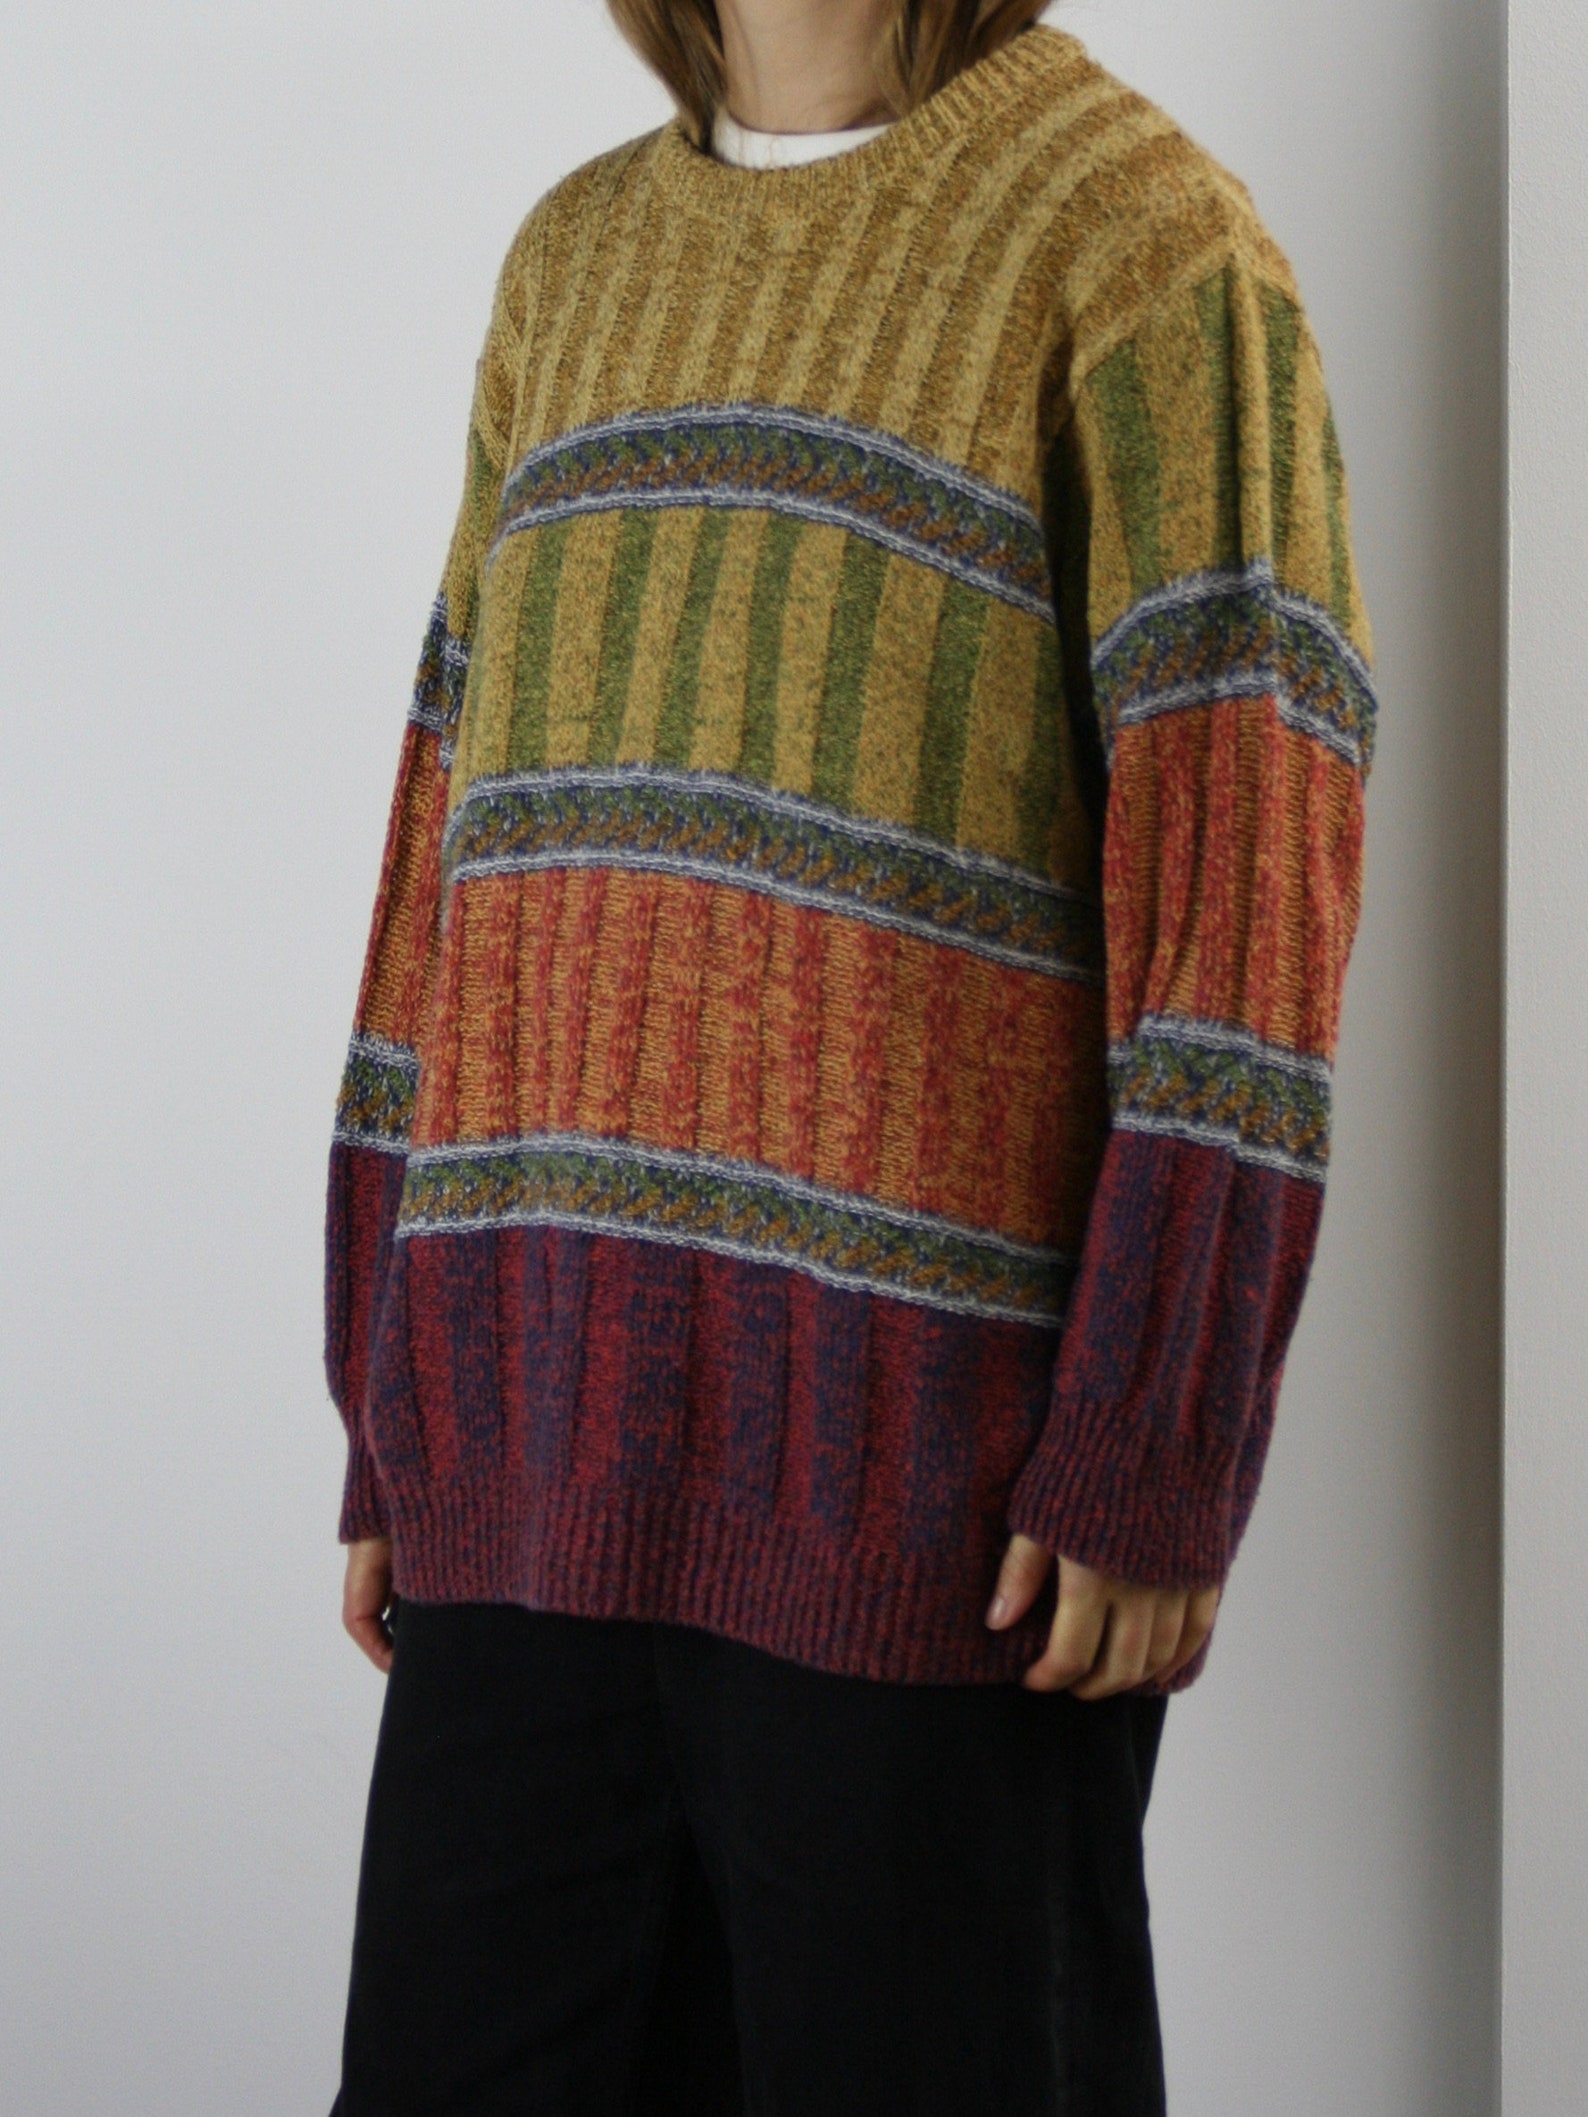 90s oversized sweater cotton/multicolor/unisex | Etsy